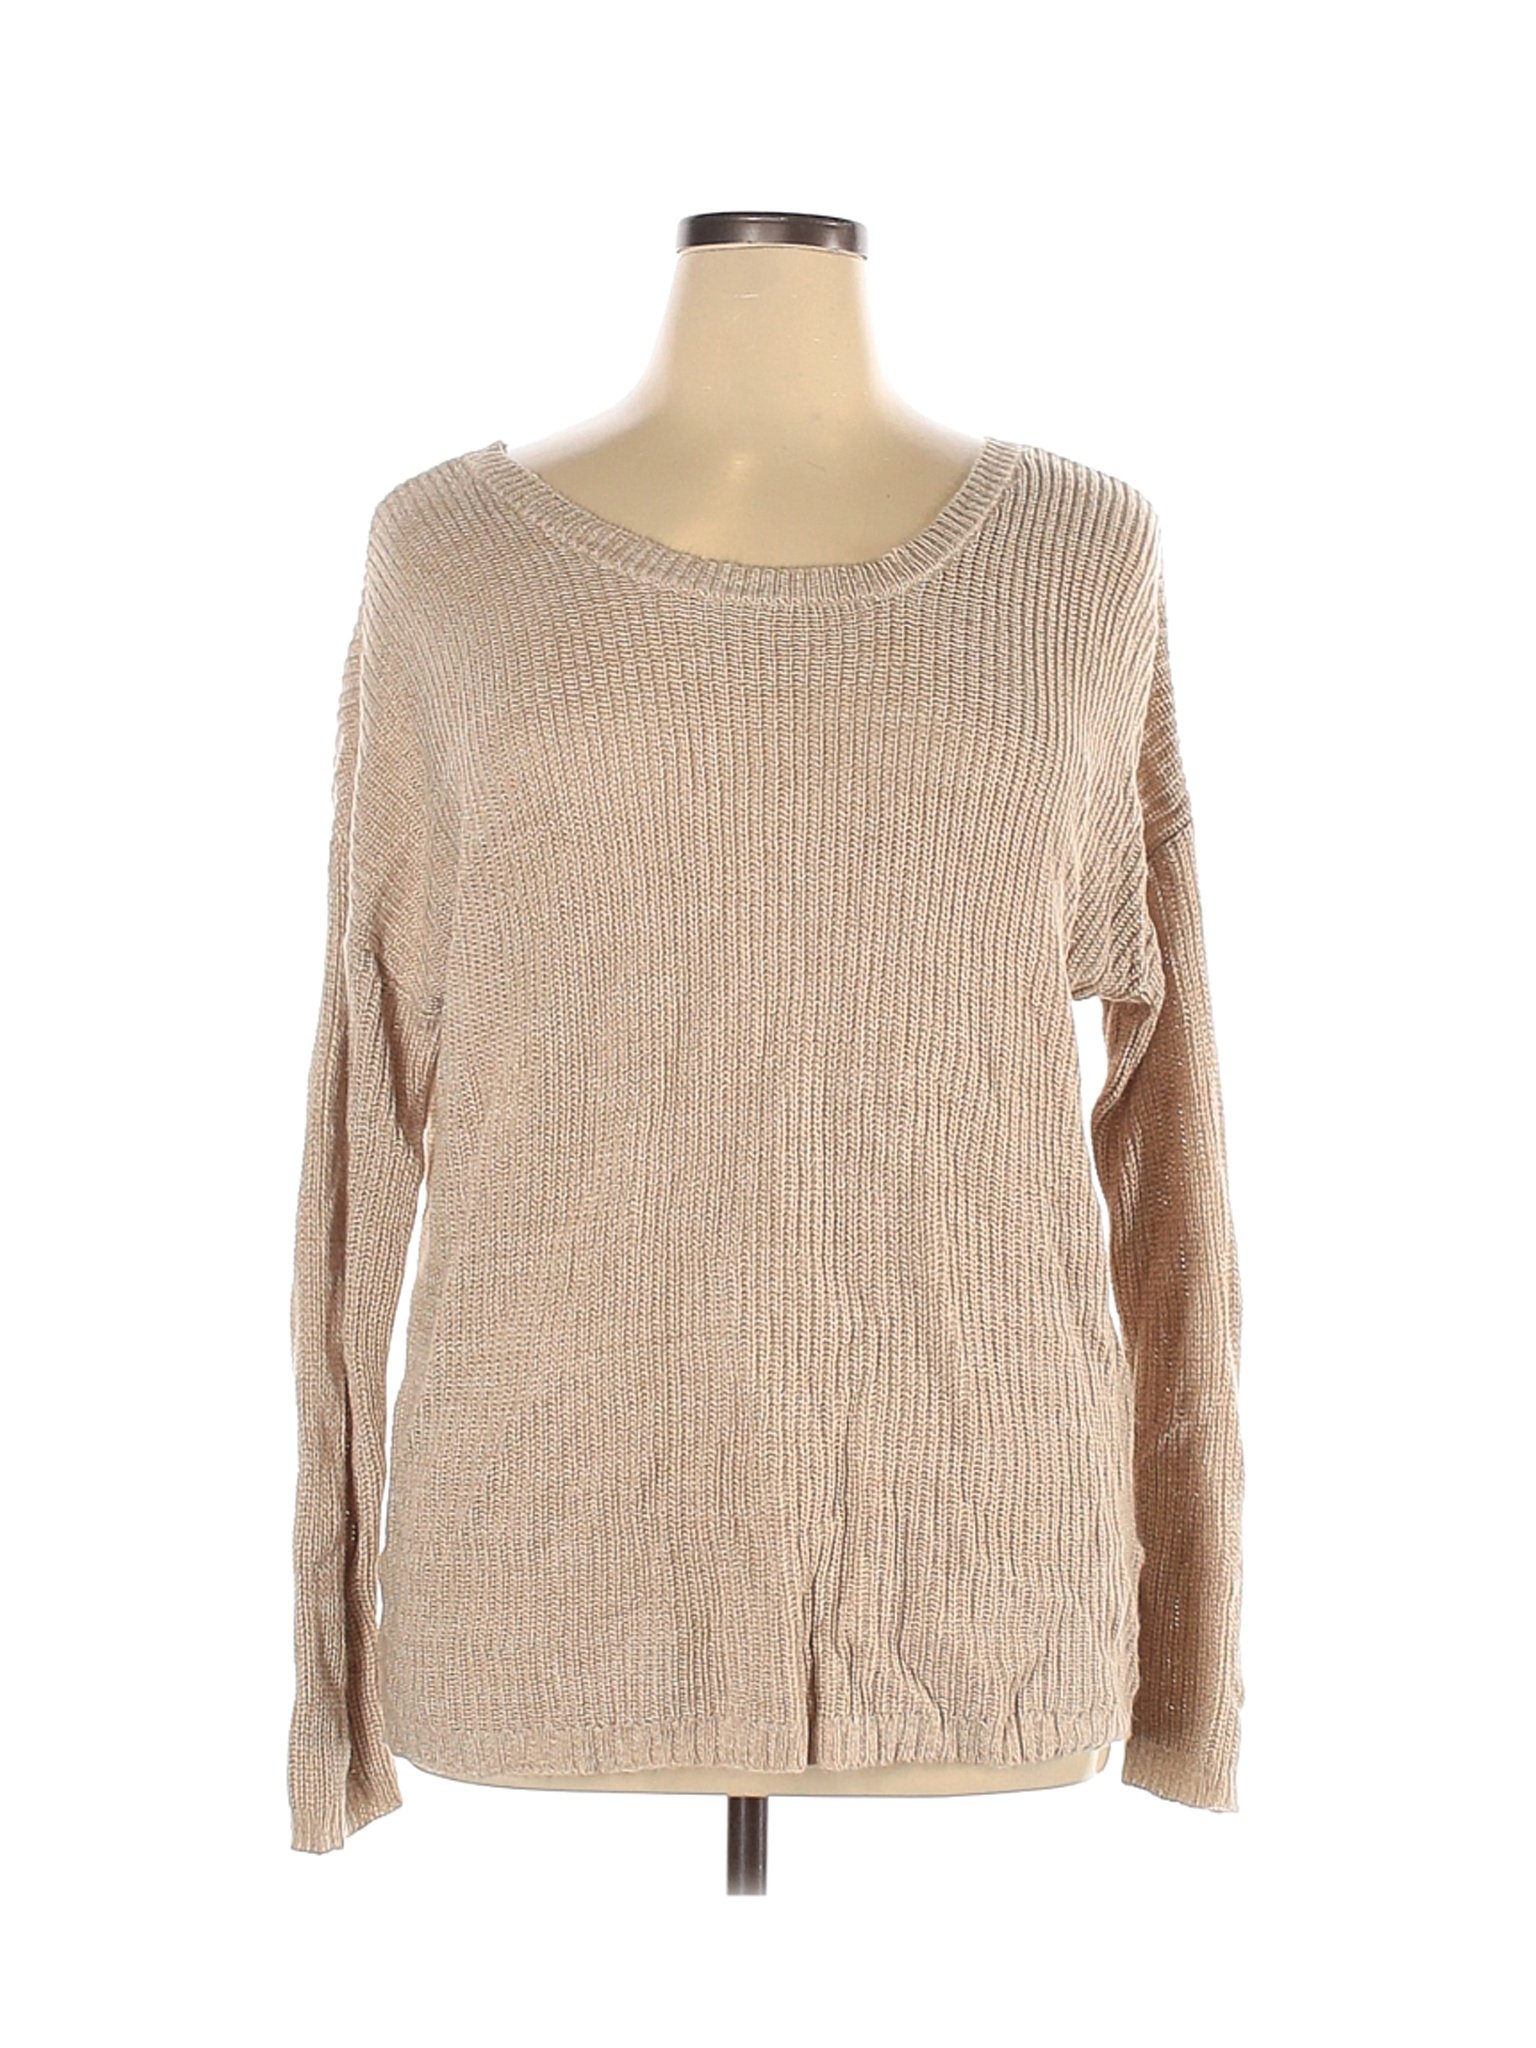 Torrid Women Brown Pullover Sweater 1X Plus | eBay